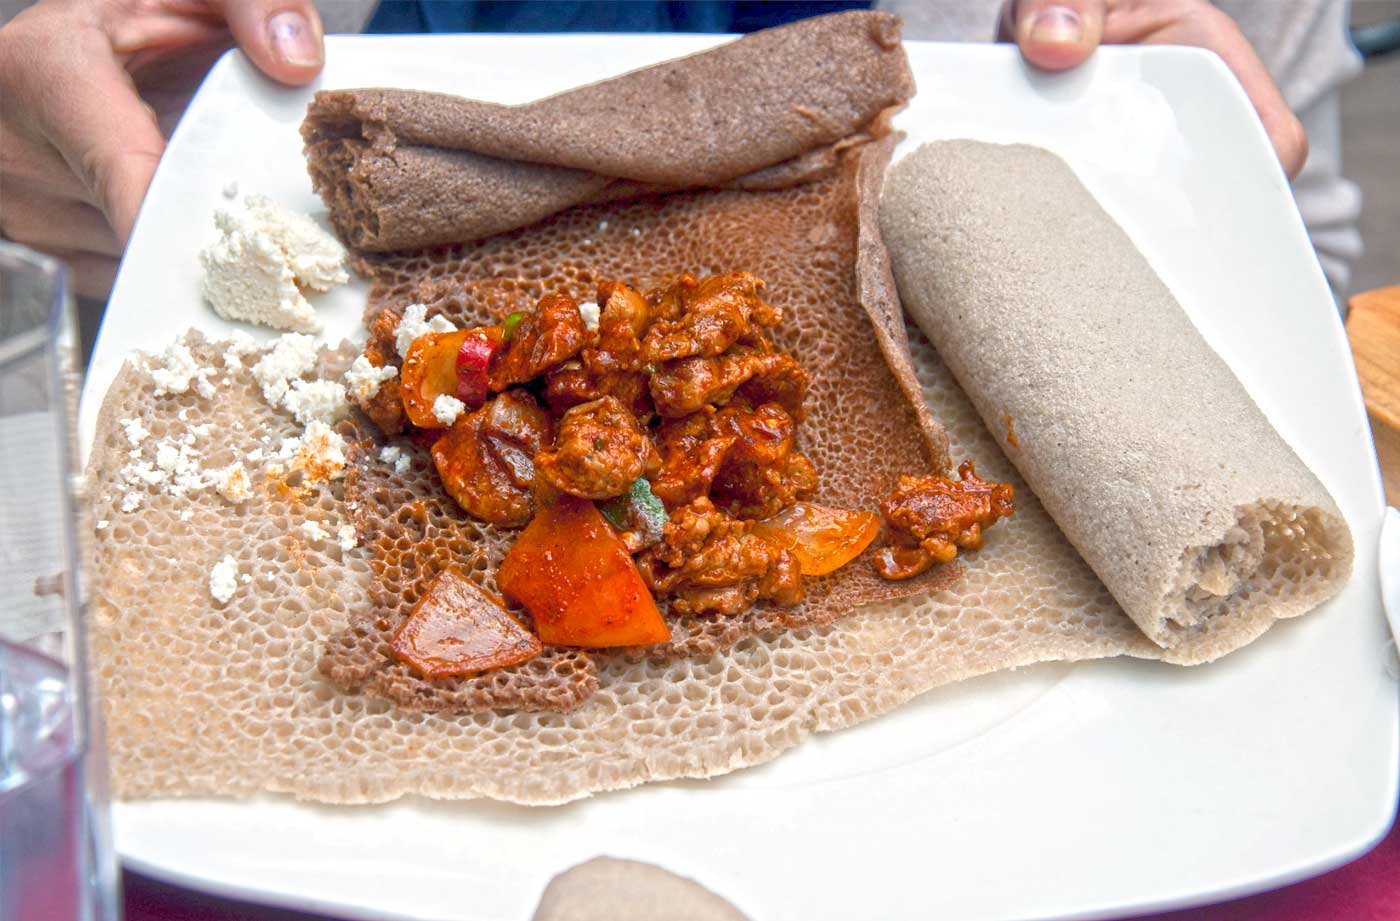 Addis Ababa Food and Drink - injera